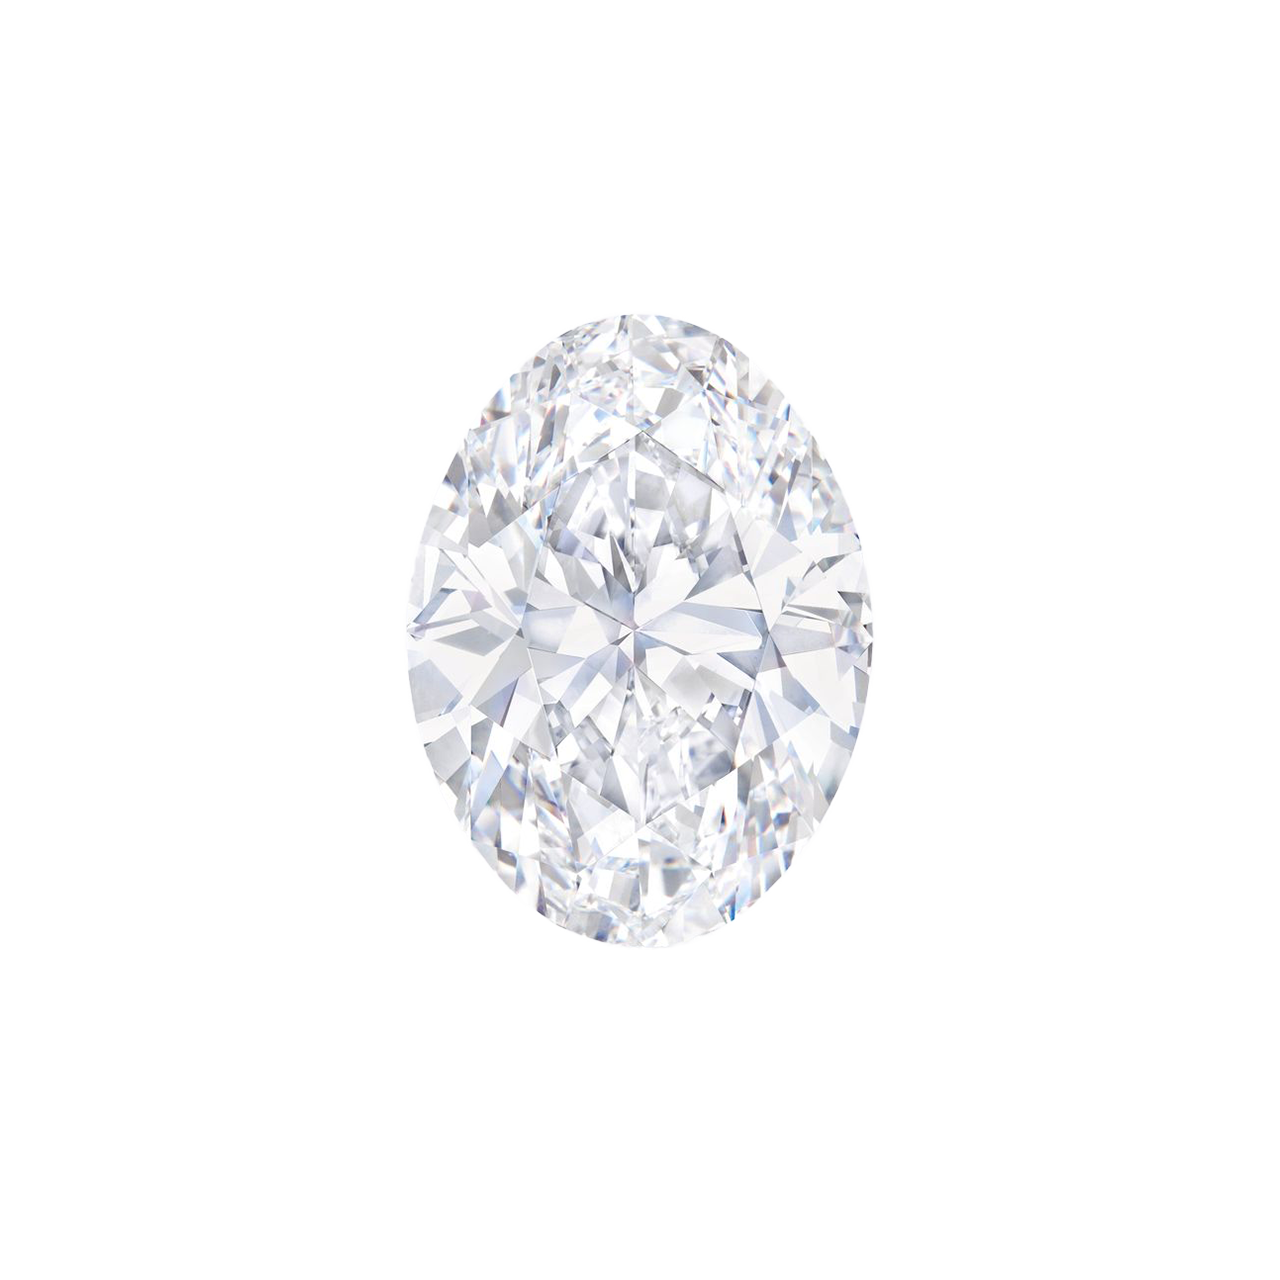 GIA 10.01克拉 全美白鑽裸石
EXQUISITE UNMOUNTED INTERNALLY FLAWLESS DIAMOND